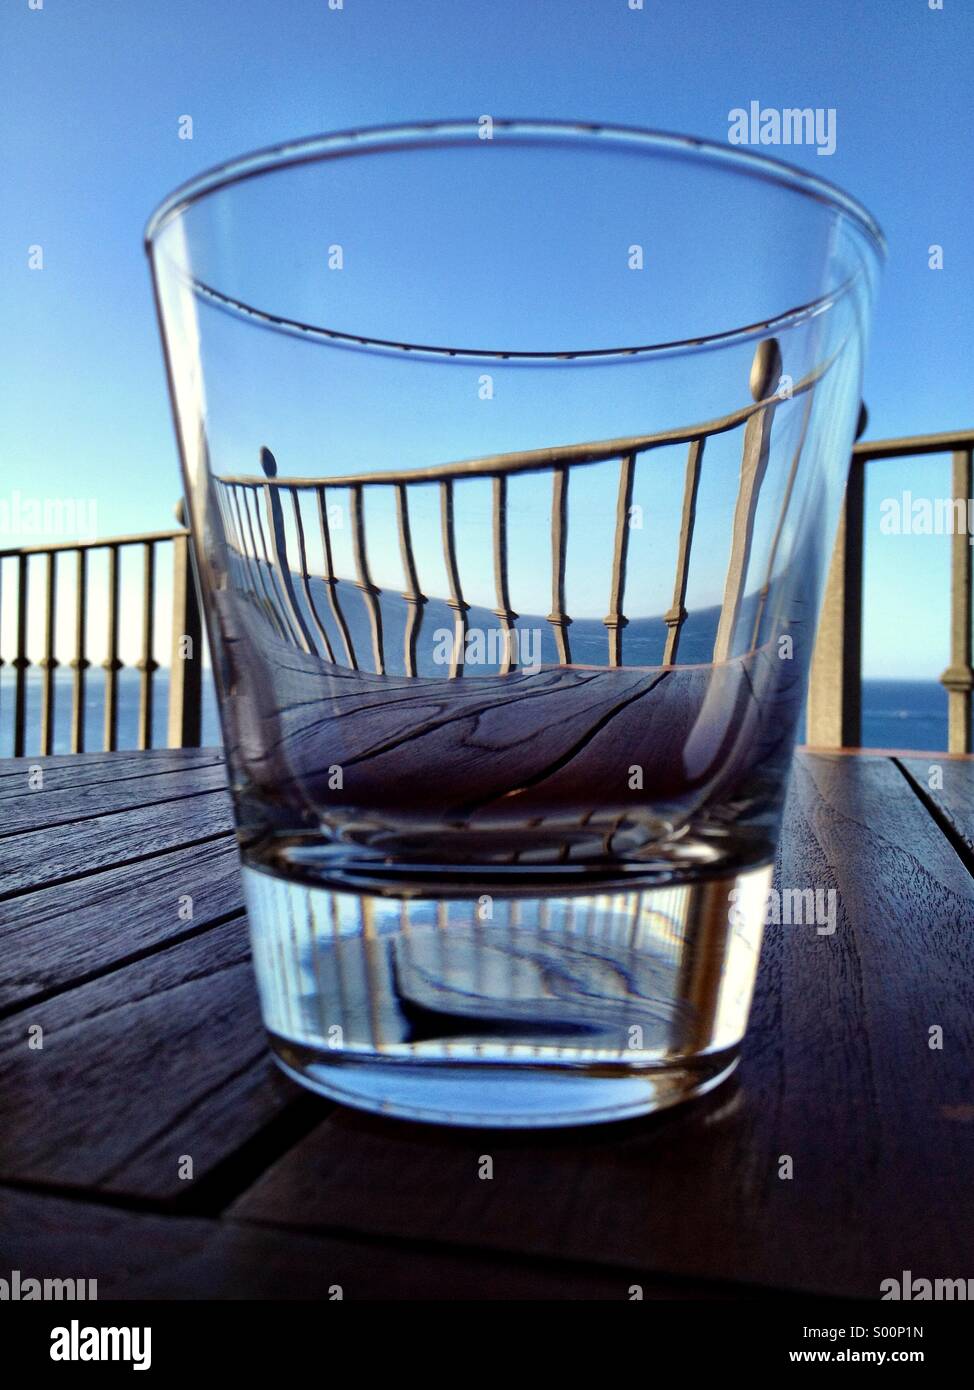 View through a glass Stock Photo